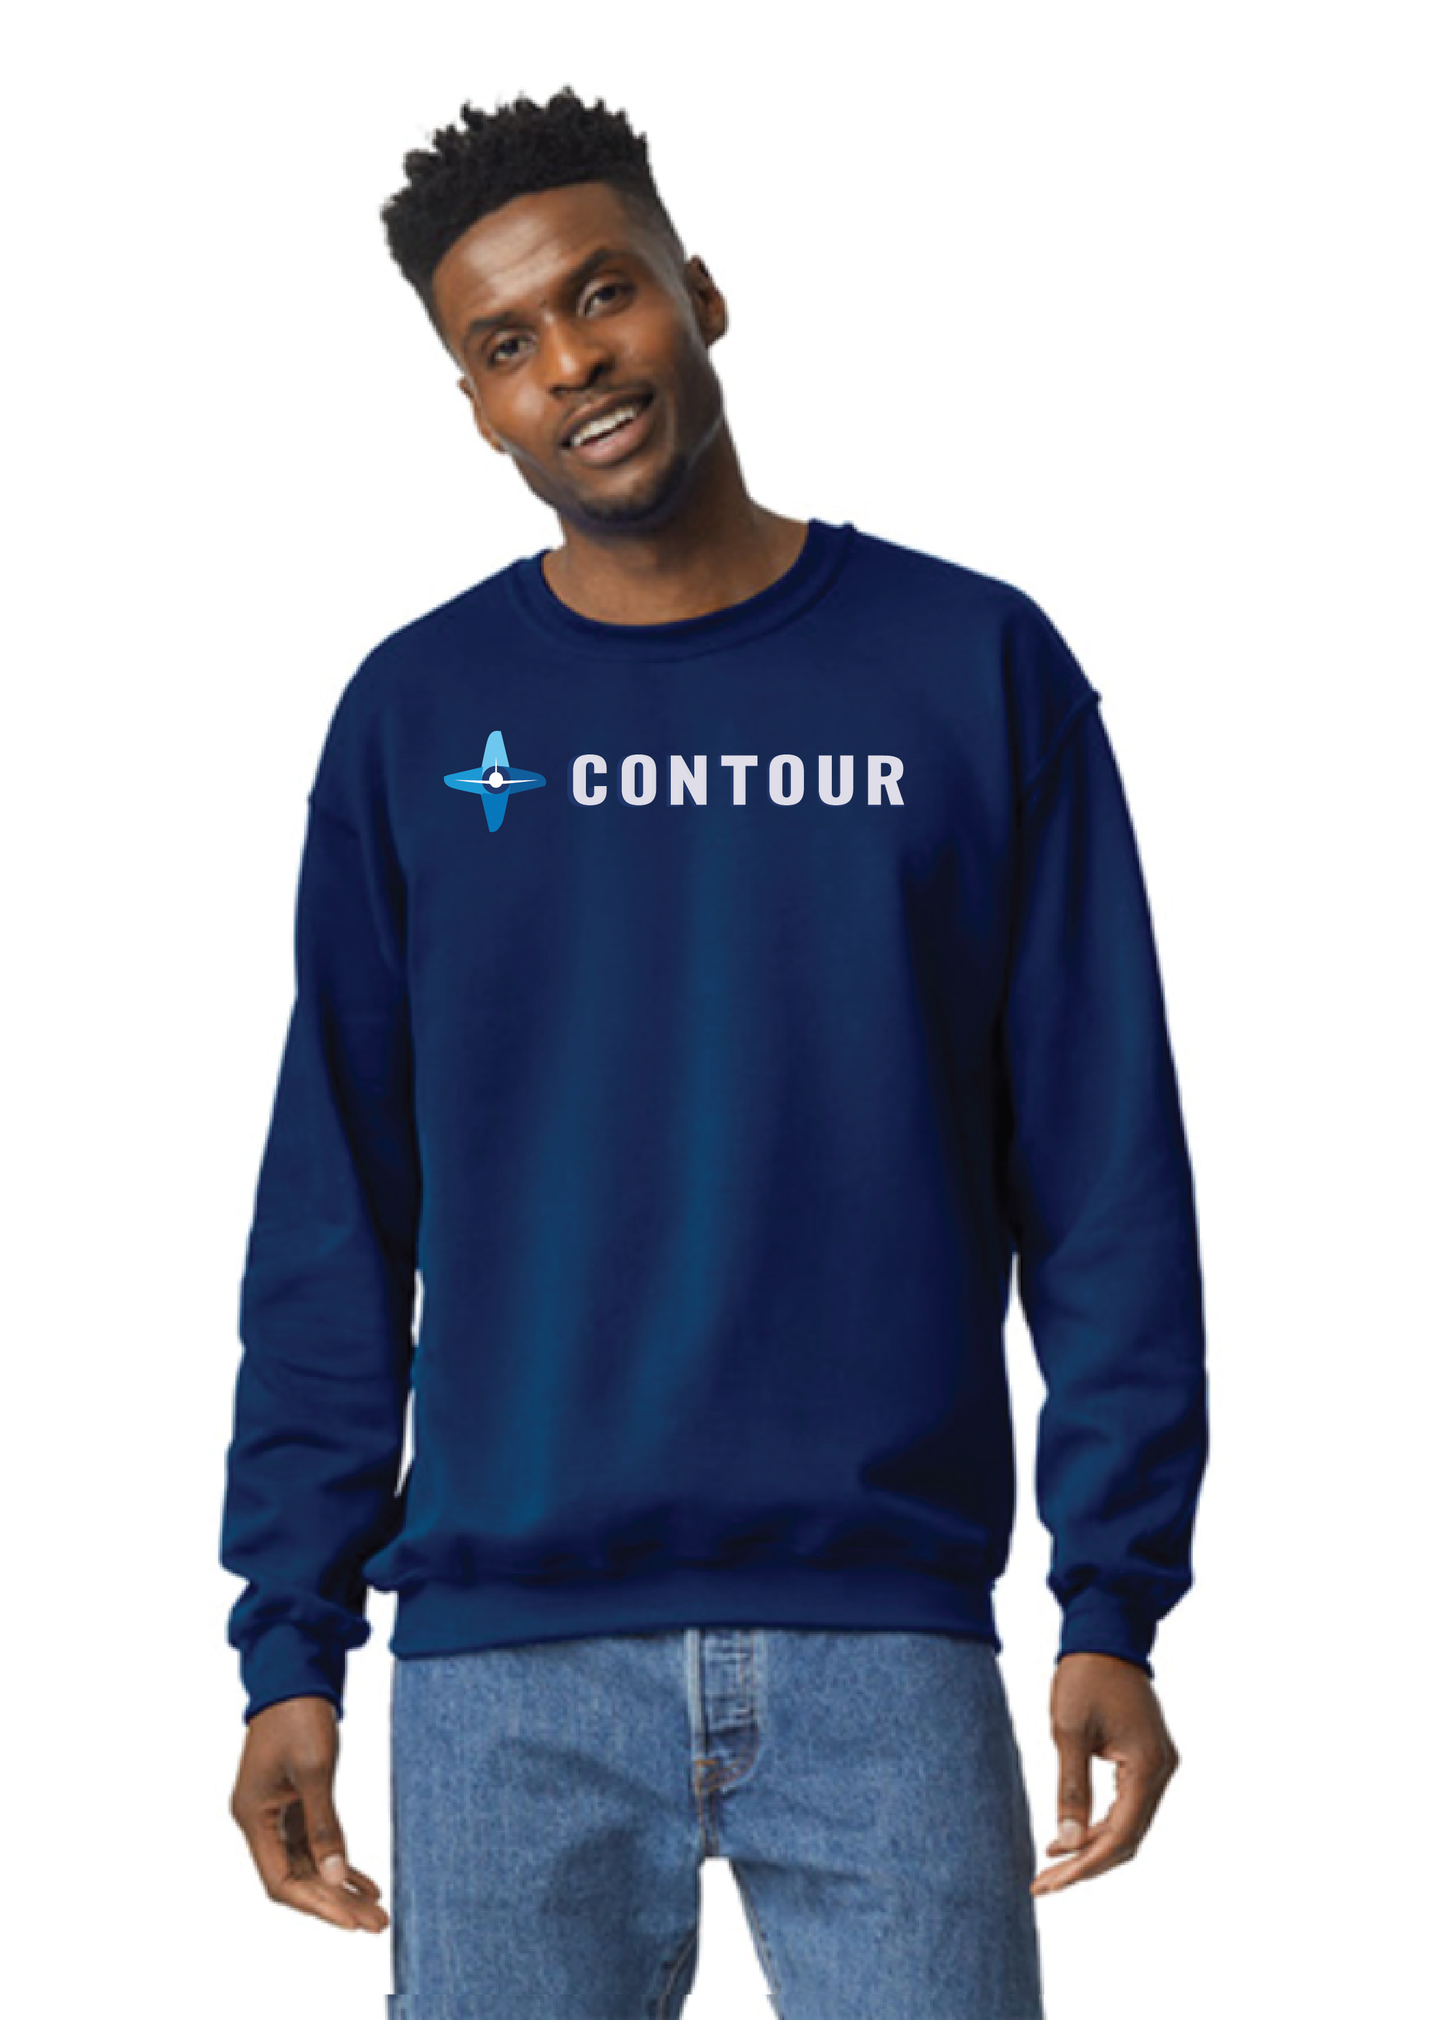 Contour - UNISEX Sweatshirt